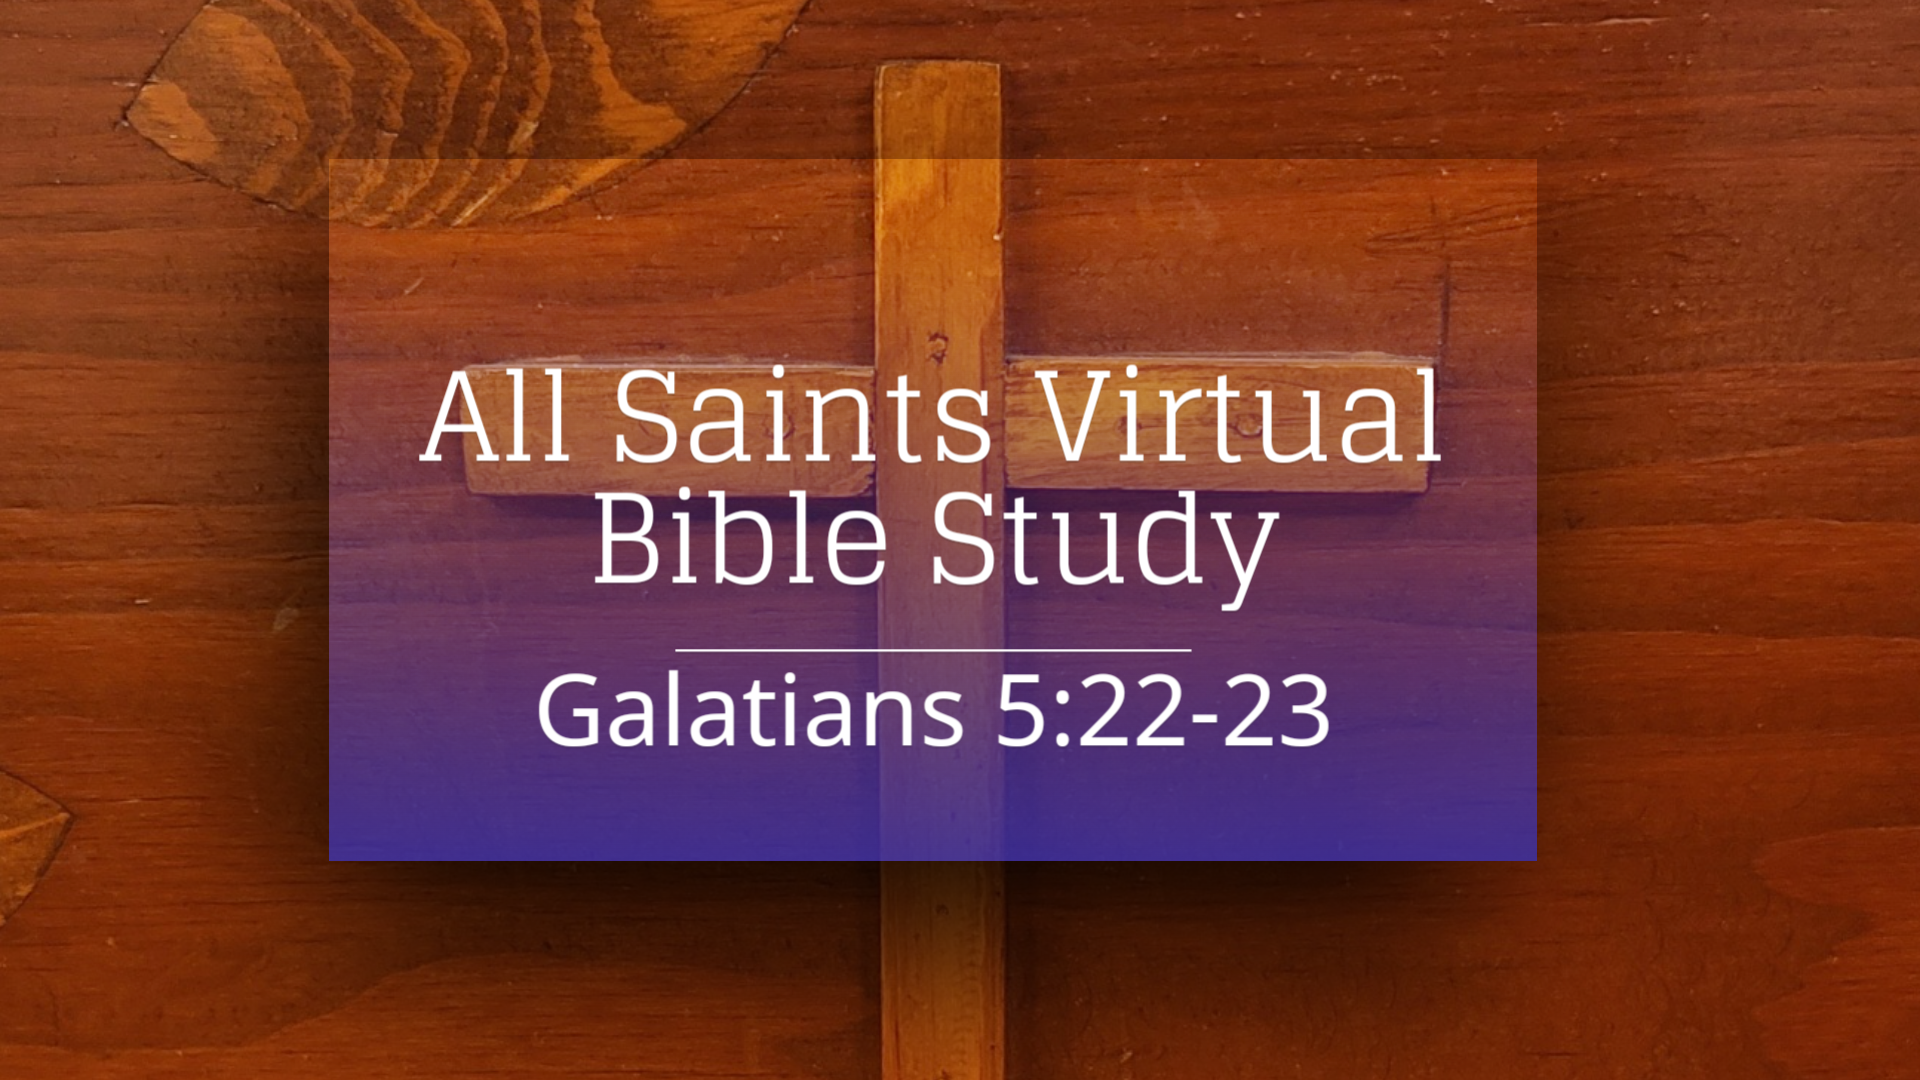 All Saints Virtual Bible Study - Galatians 5:22-23